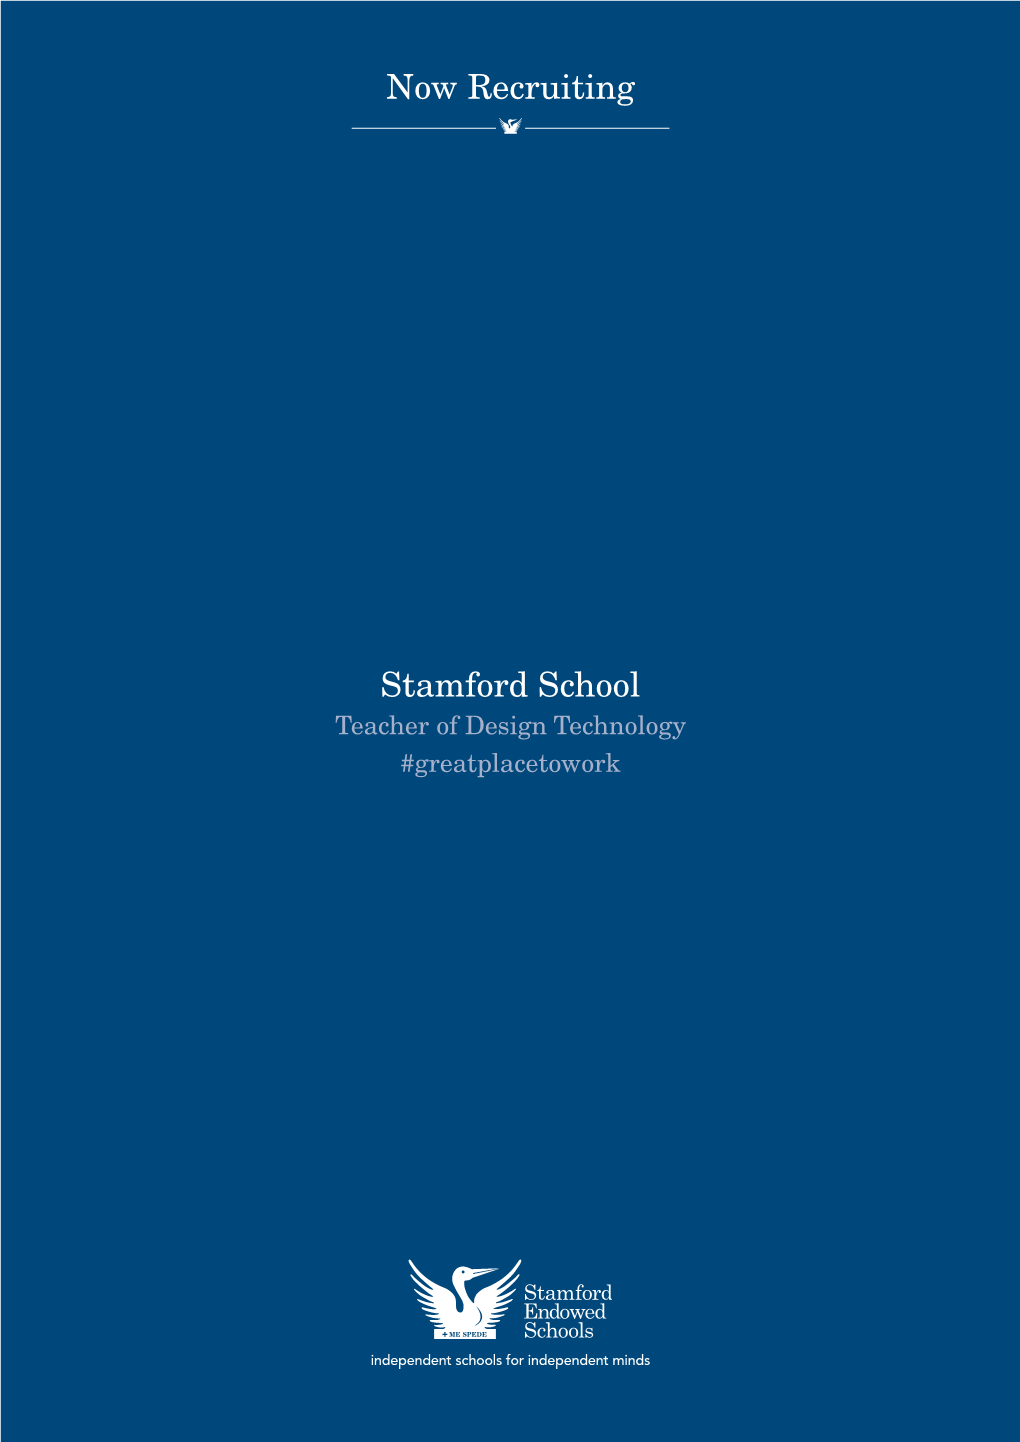 Stamford School Now Recruiting